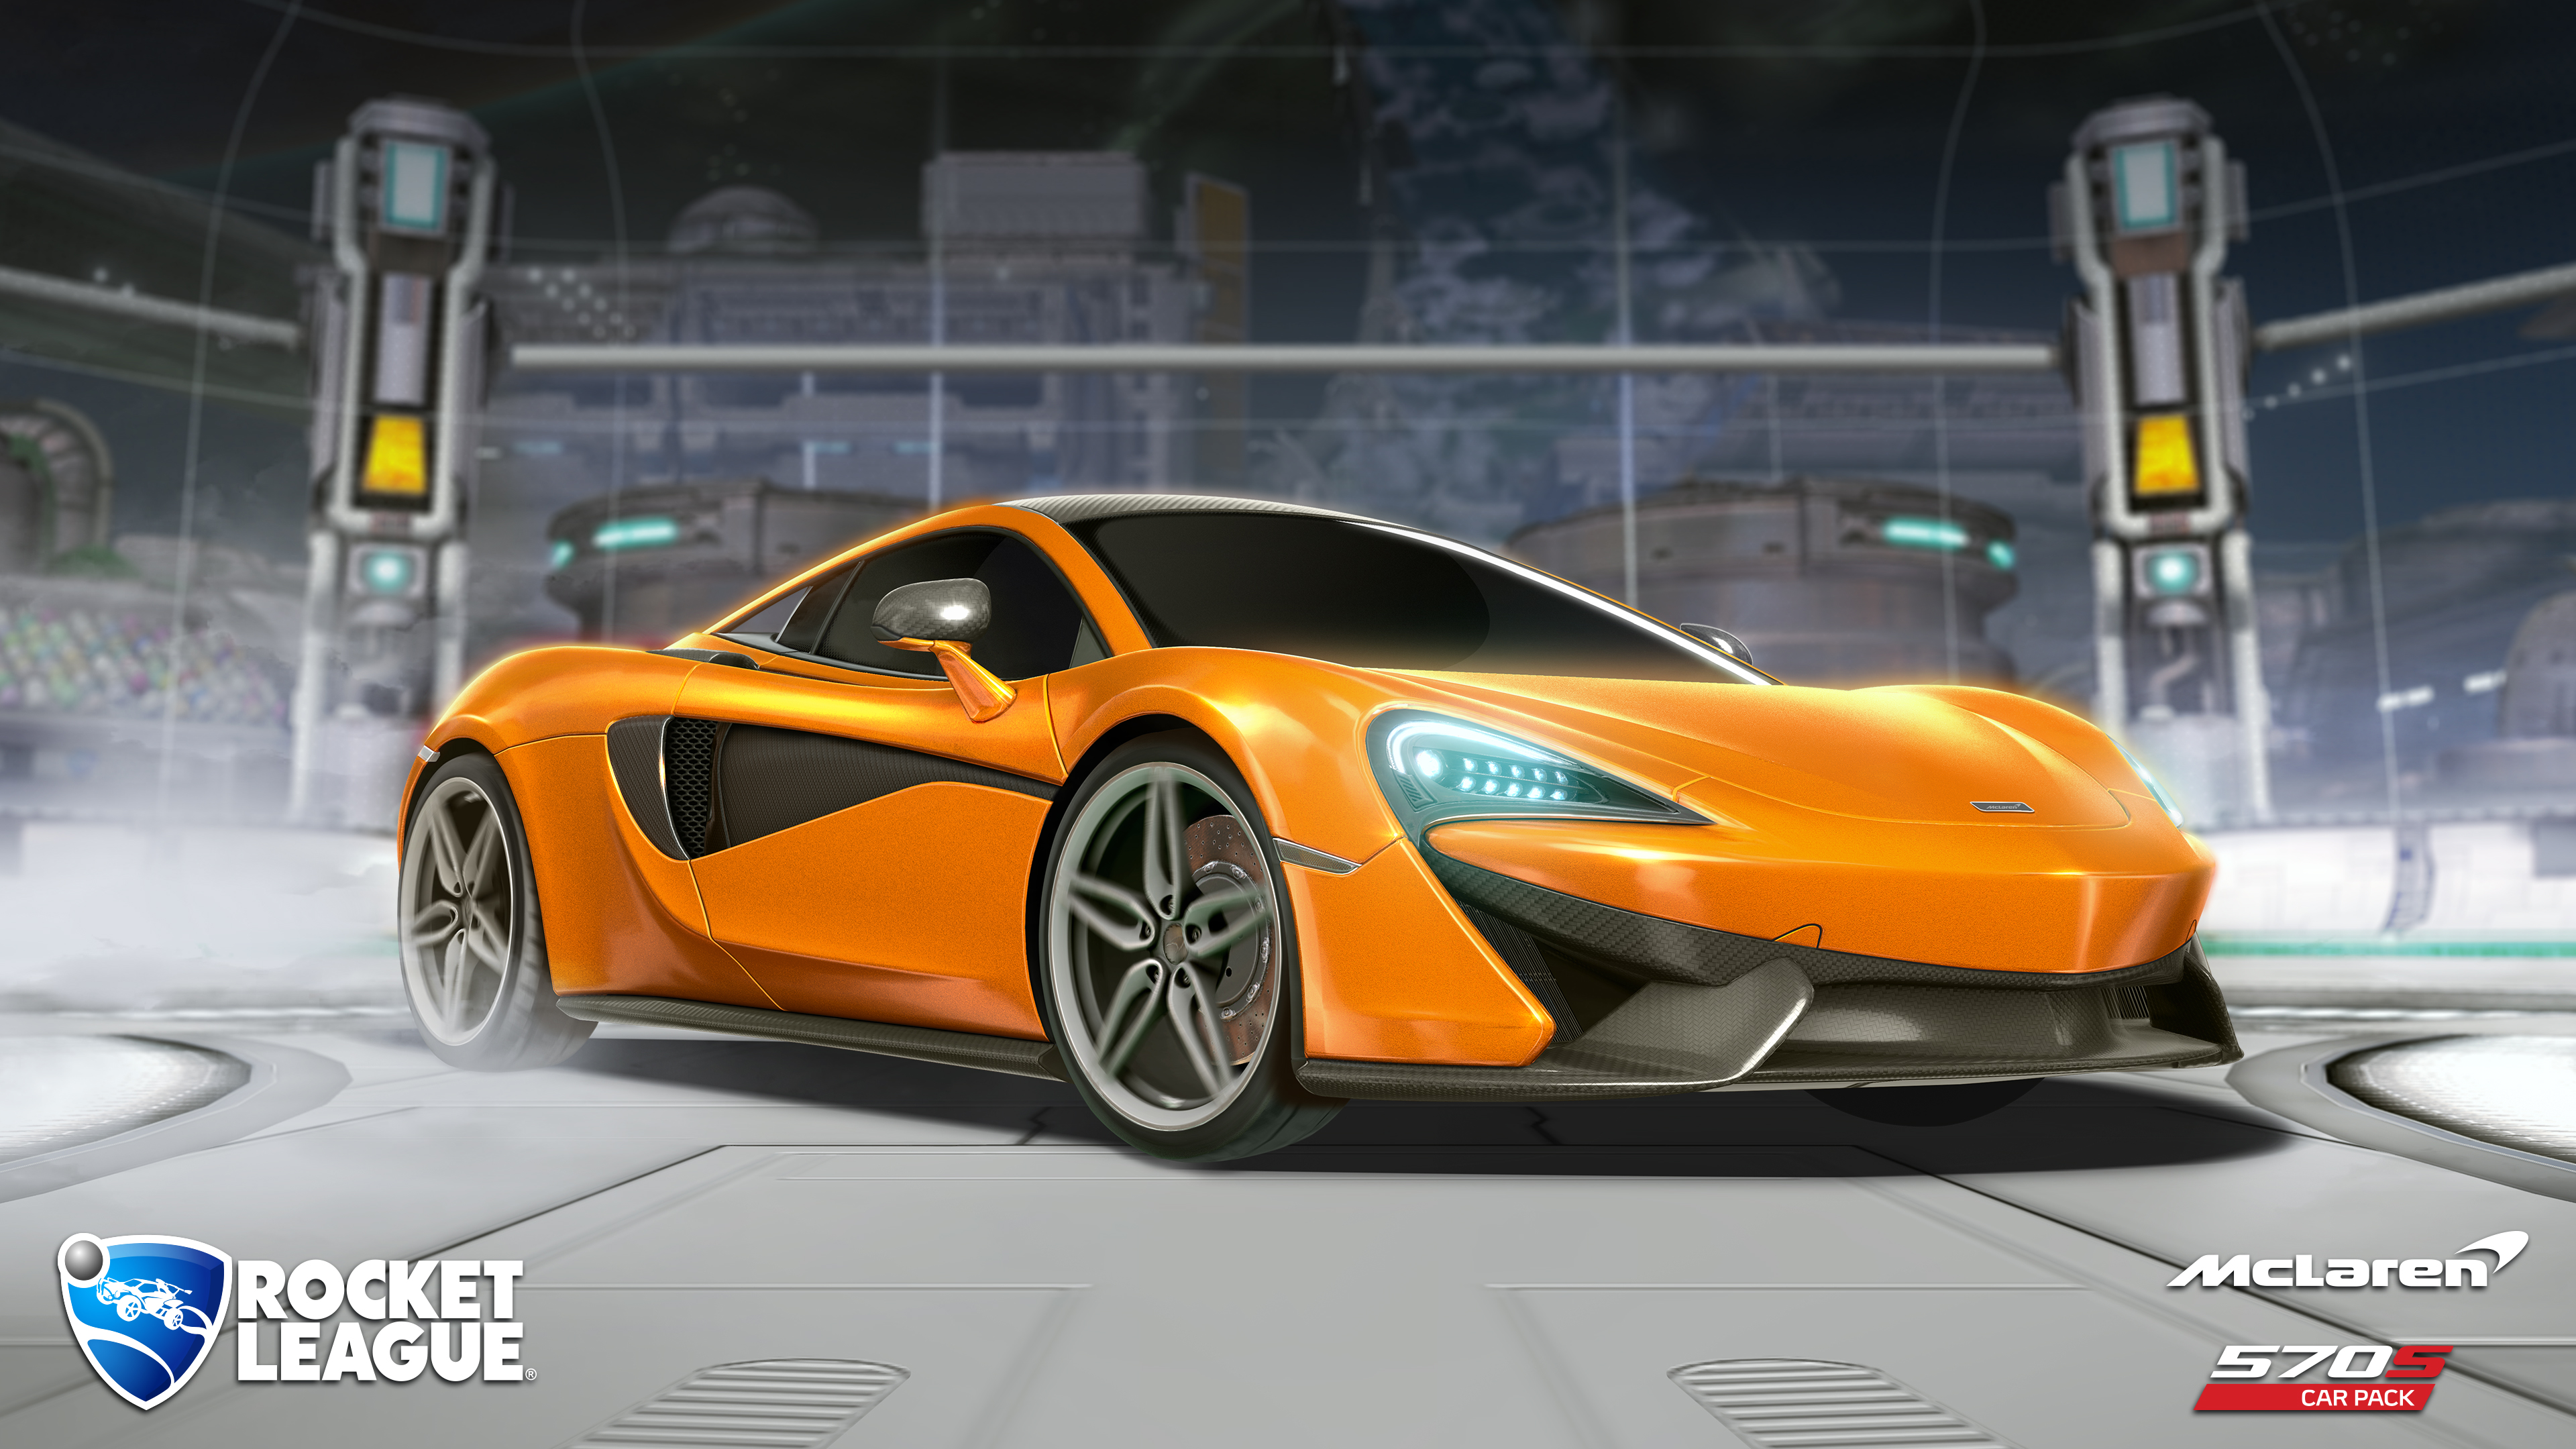 Rocket-League-McLaren-570S